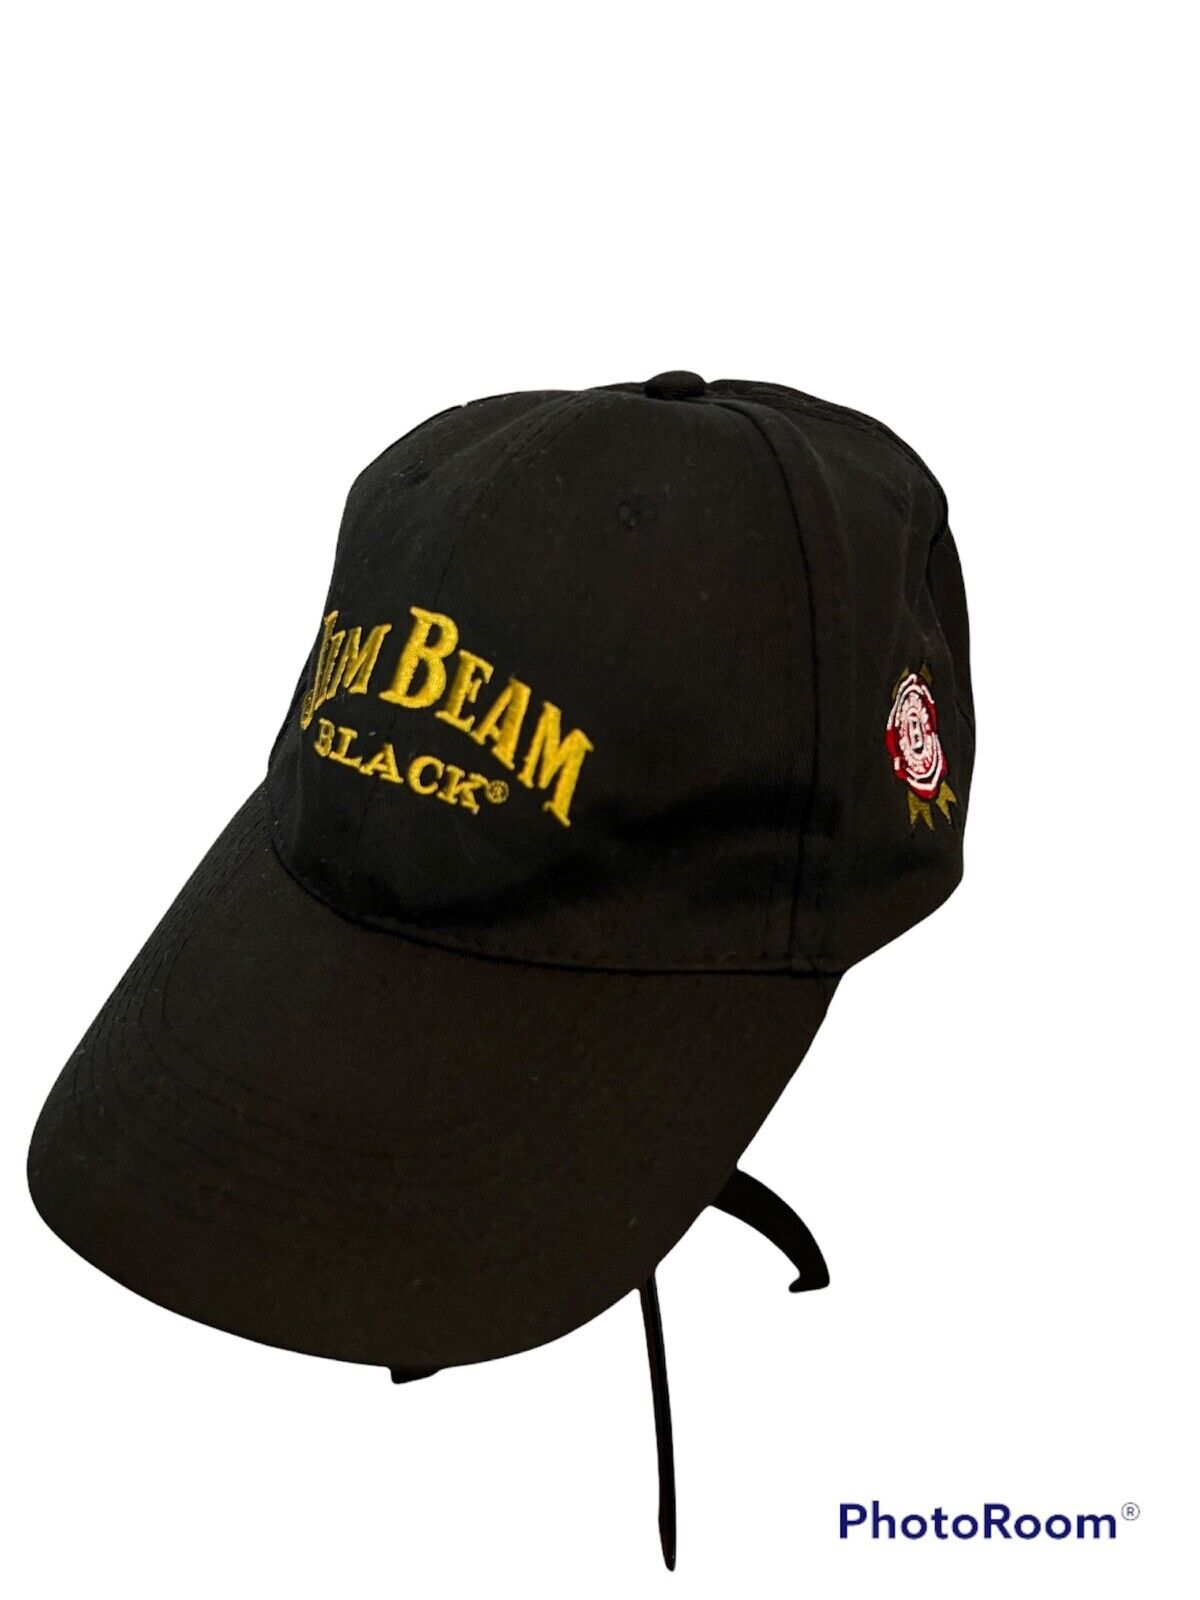 JIM BEAM BASEBALL HAT CAP BLACK & GOLD EMBROIDERED JIM BEAM - Adjustable